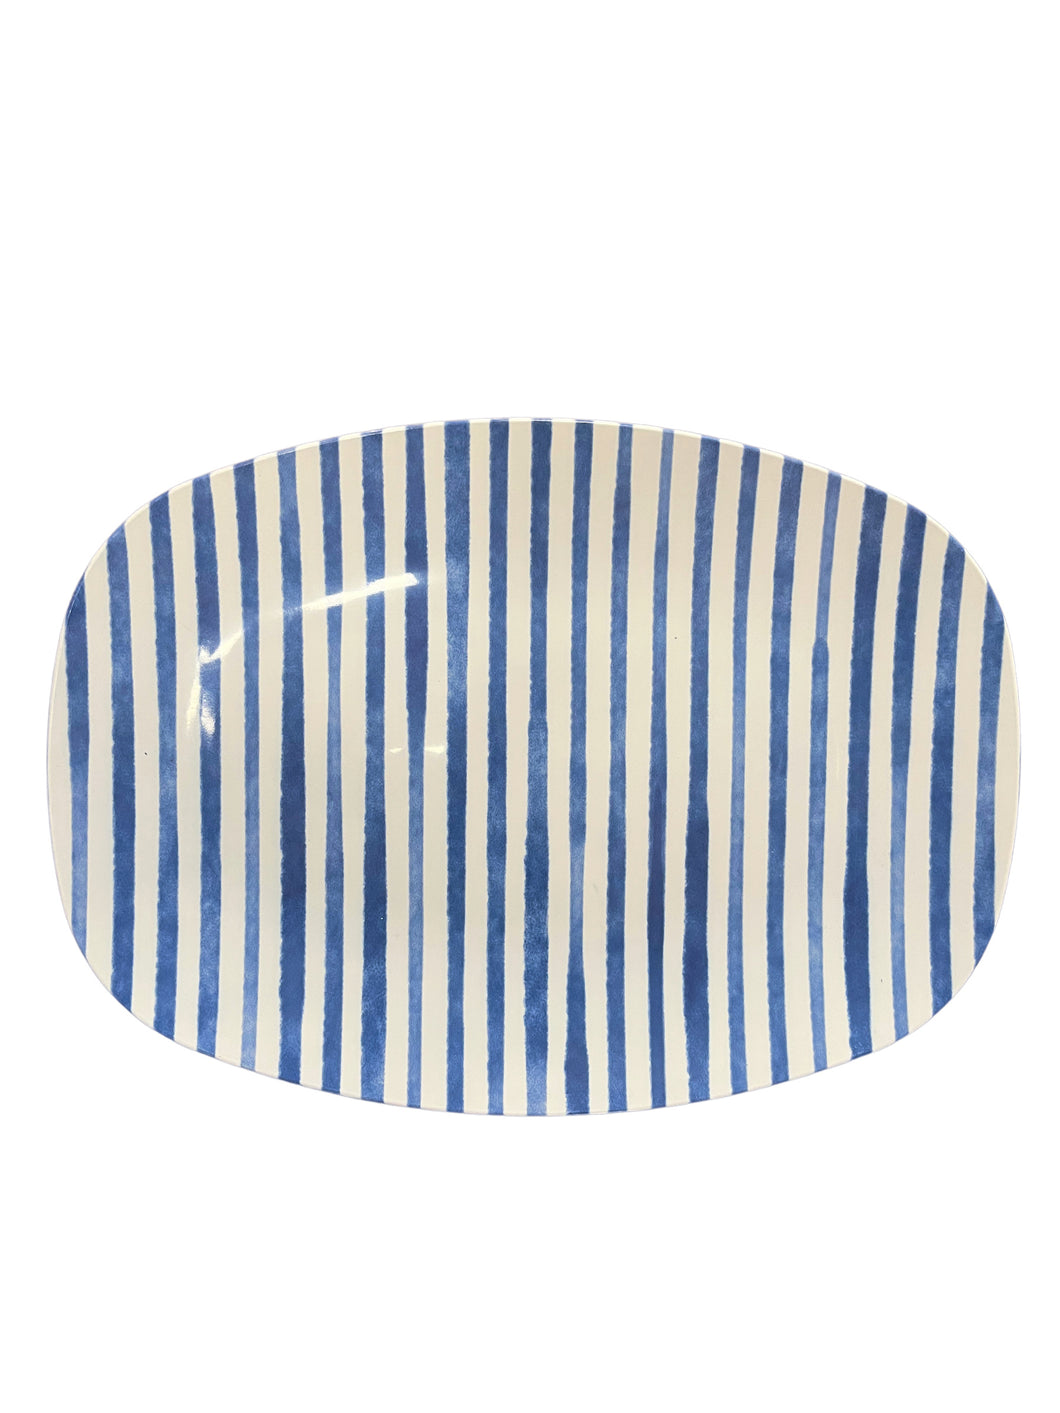 Blue Simple Stripes Platter